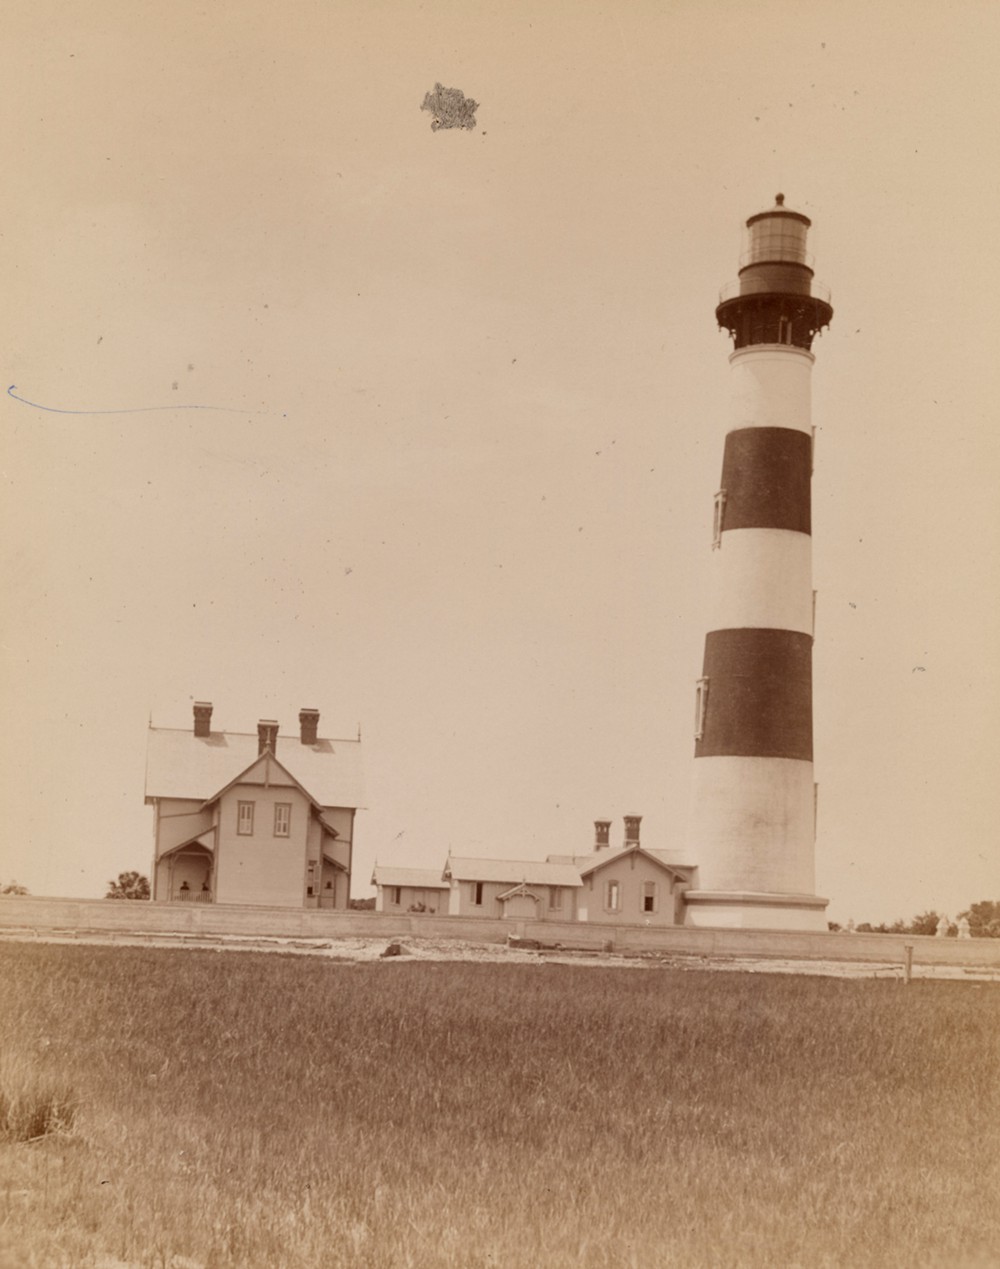 Morris Island Lighthouse, Charleston South Carolina Morris Island Light Station (1885)